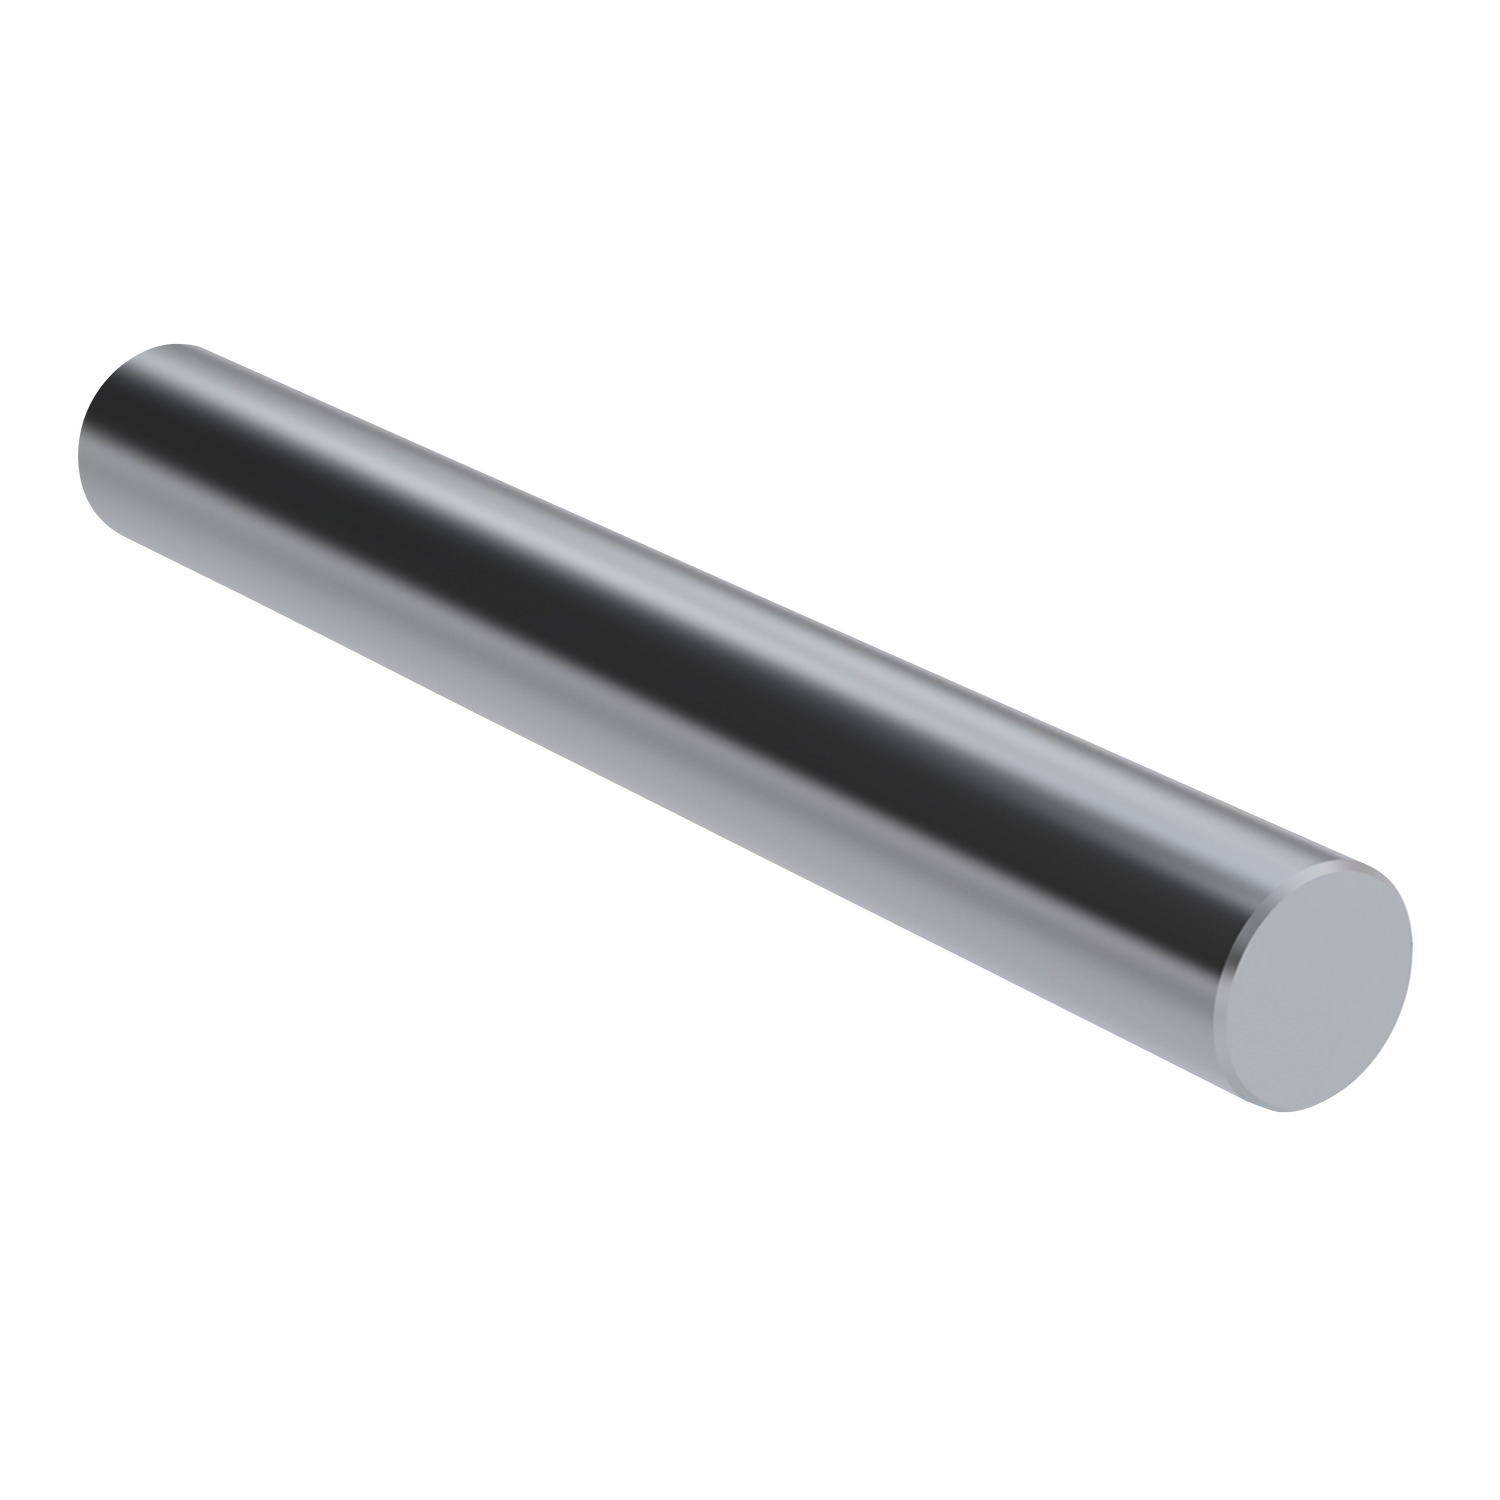 Steel Linear Shafts Hardened Linear Shafts for linear bearings (h6 tolerance).